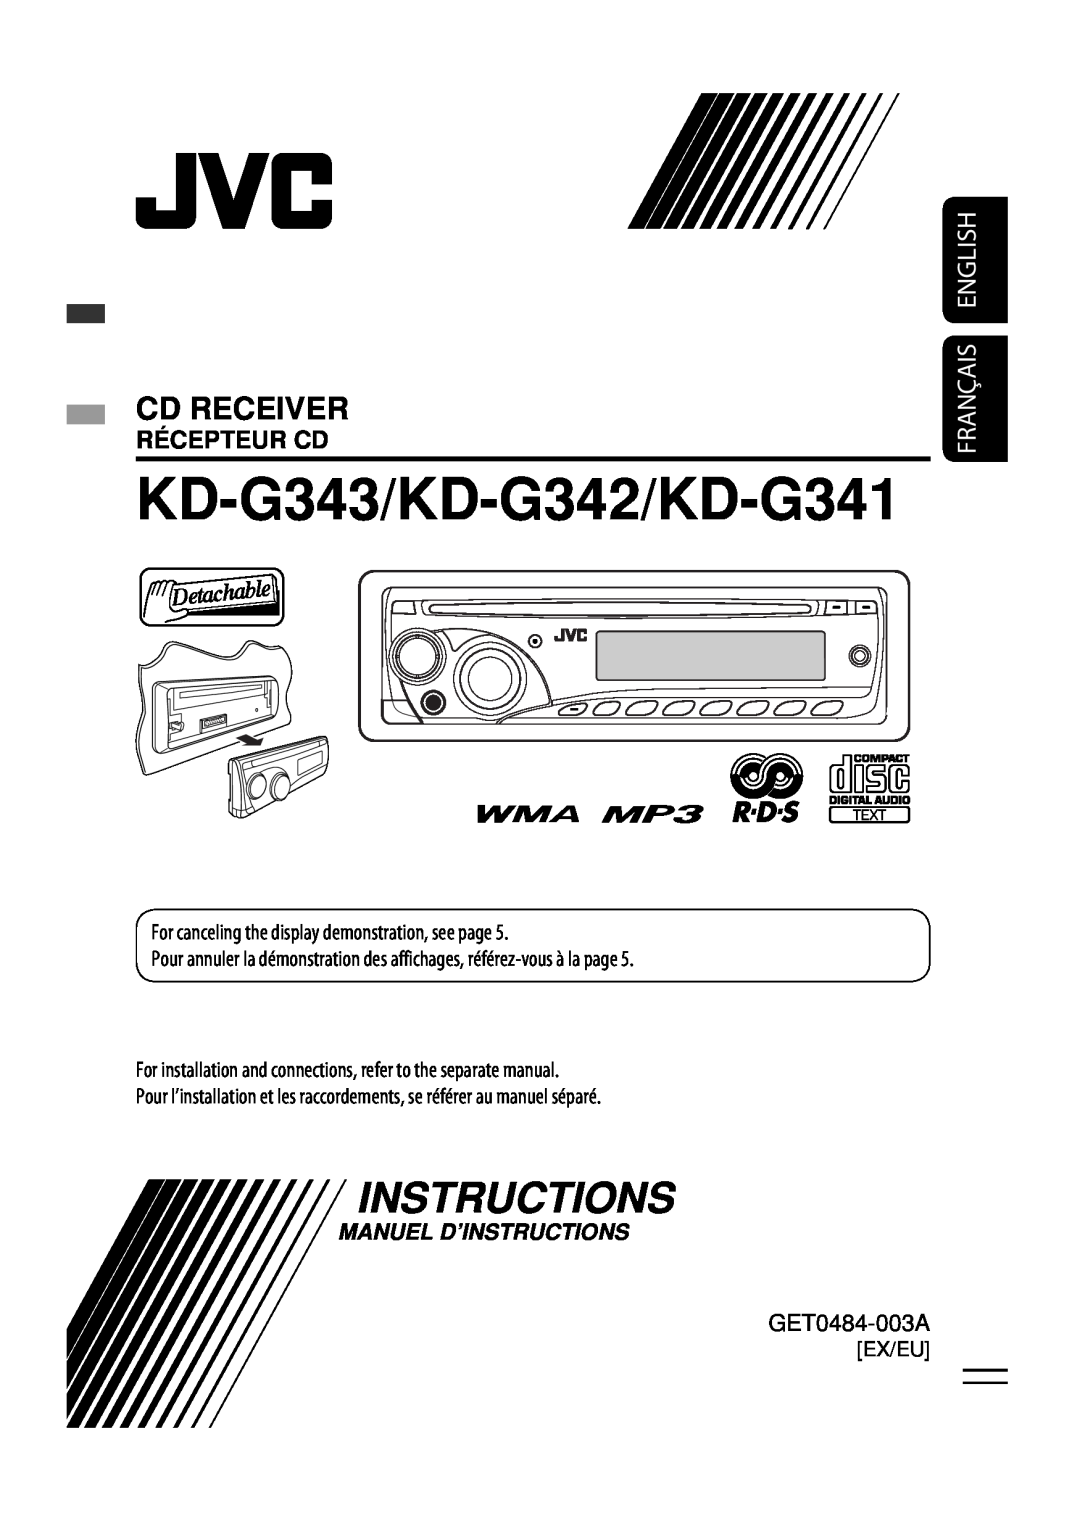 JVC MA372IEN user service KD-G343/KD-G342/KD-G341, Français English, Récepteur Cd, Manuel D’Instructions, Cd Receiver 